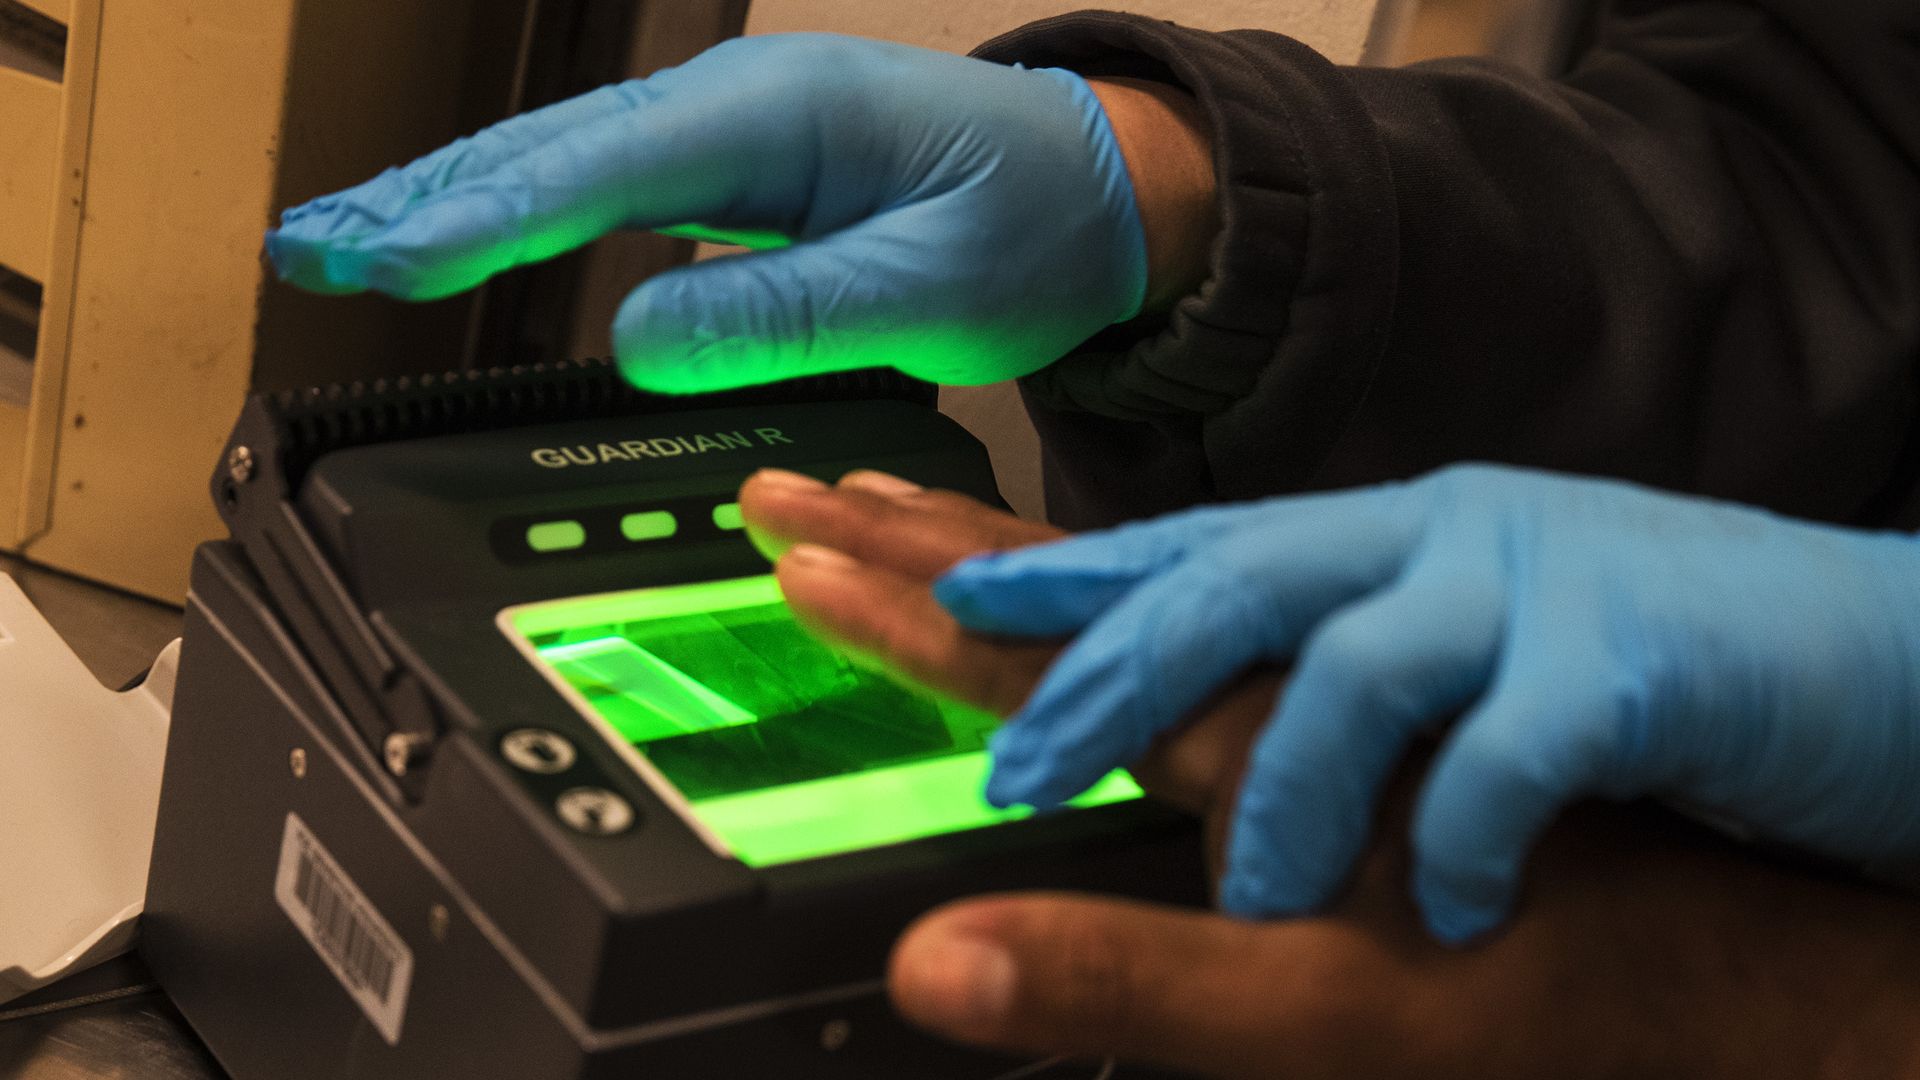 Gloved hands pressing another ungloved hand to a fingerprint scanner